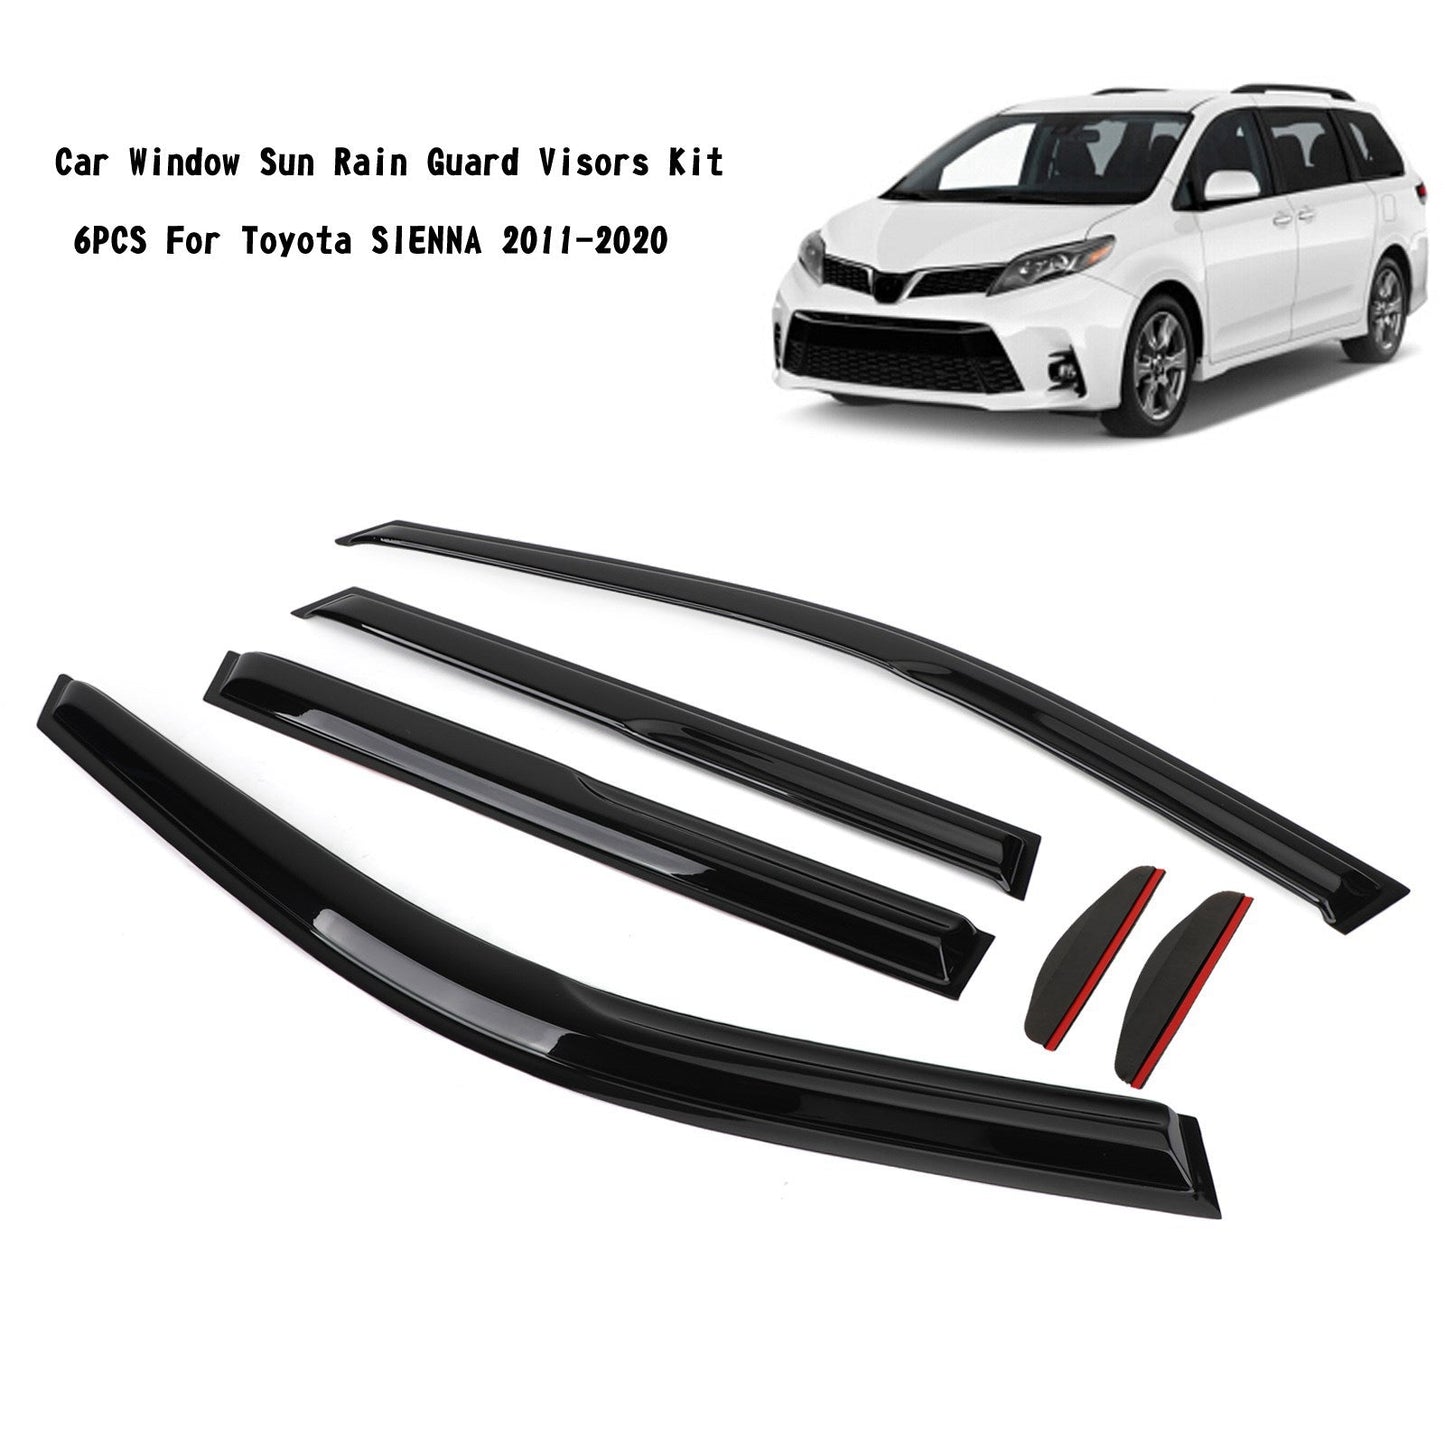 Car Window Sun Rain Guard Visors Kit 6PCS For Toyota SIENNA 2011-2020